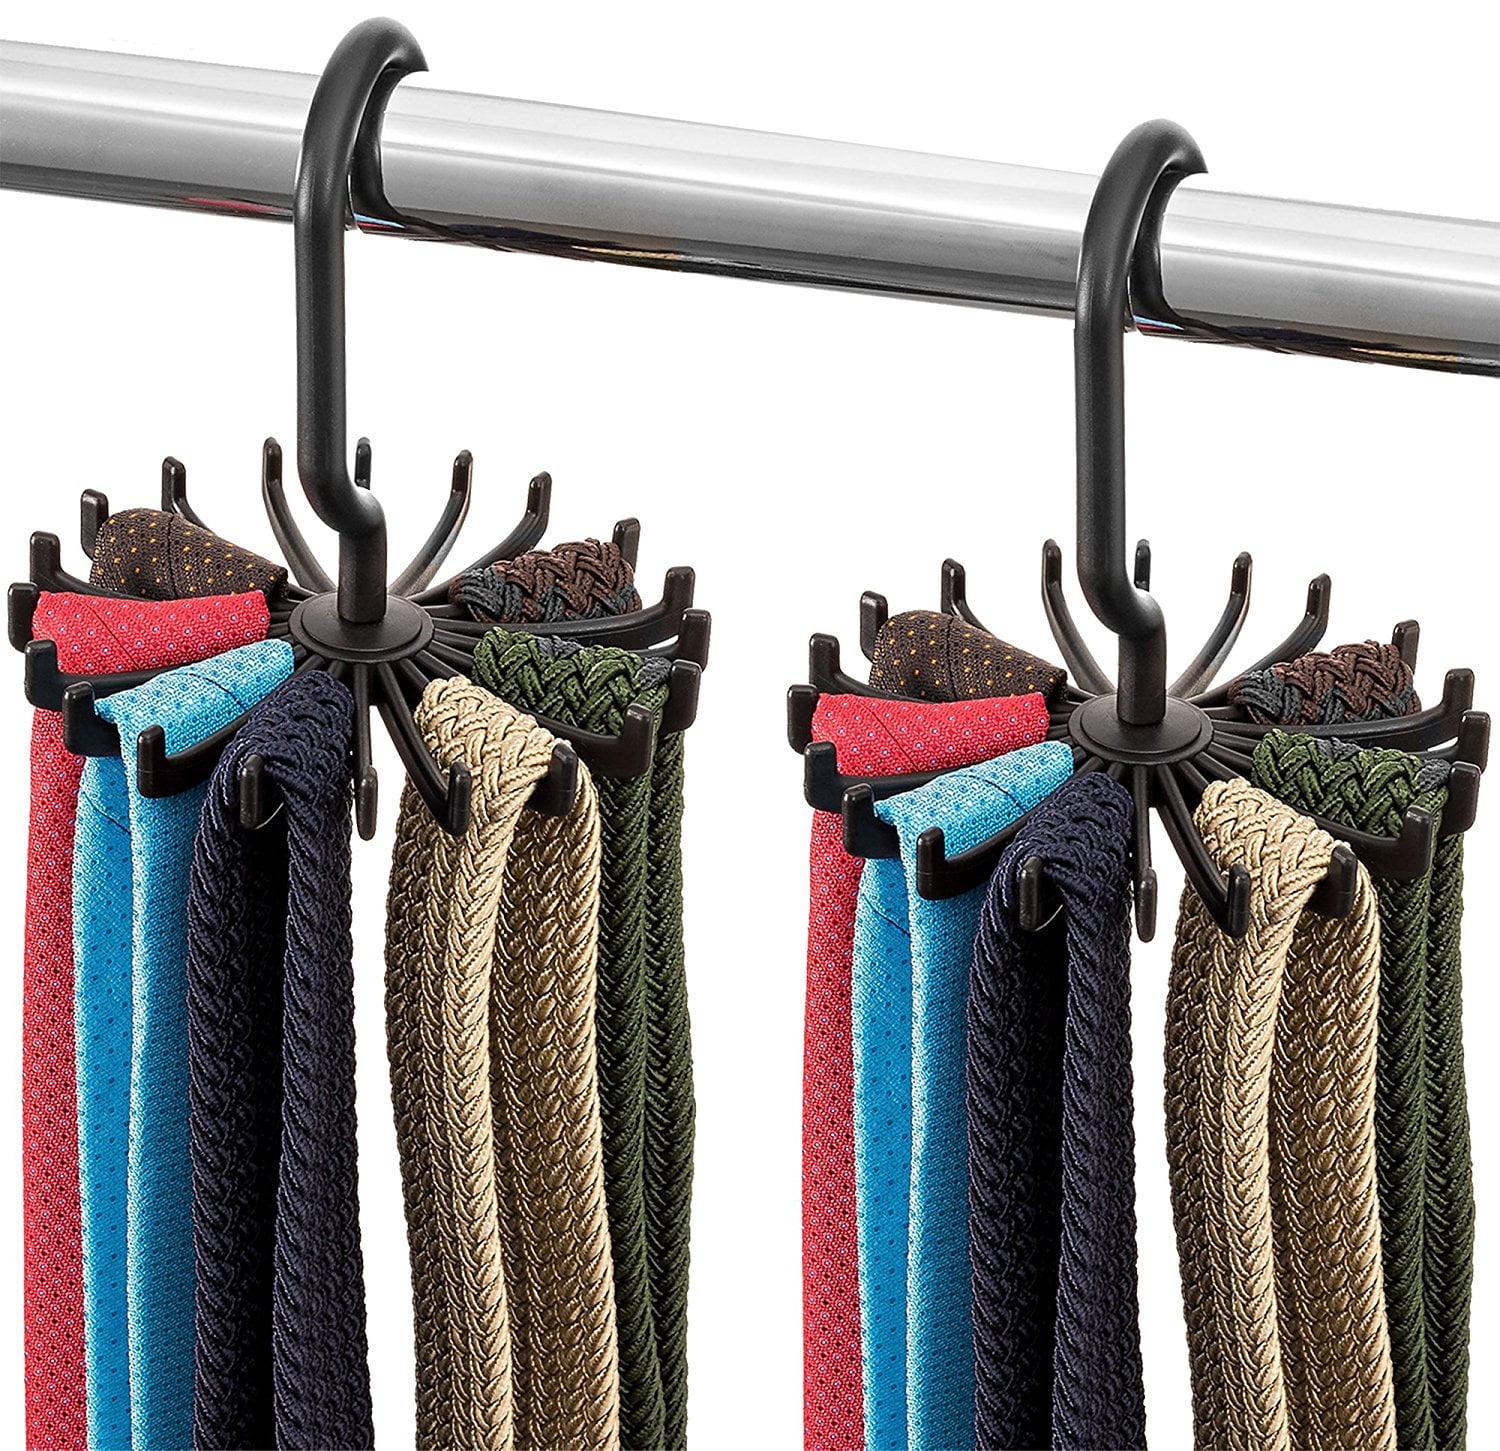 WBDZ Practical Hangers and Pants Racks Multi Blouse Shirt Tree Hanger 5 Layer Non-Slip Clothes Rack Hanging Wardrobe Closet Holder Storage Organizer Accessories